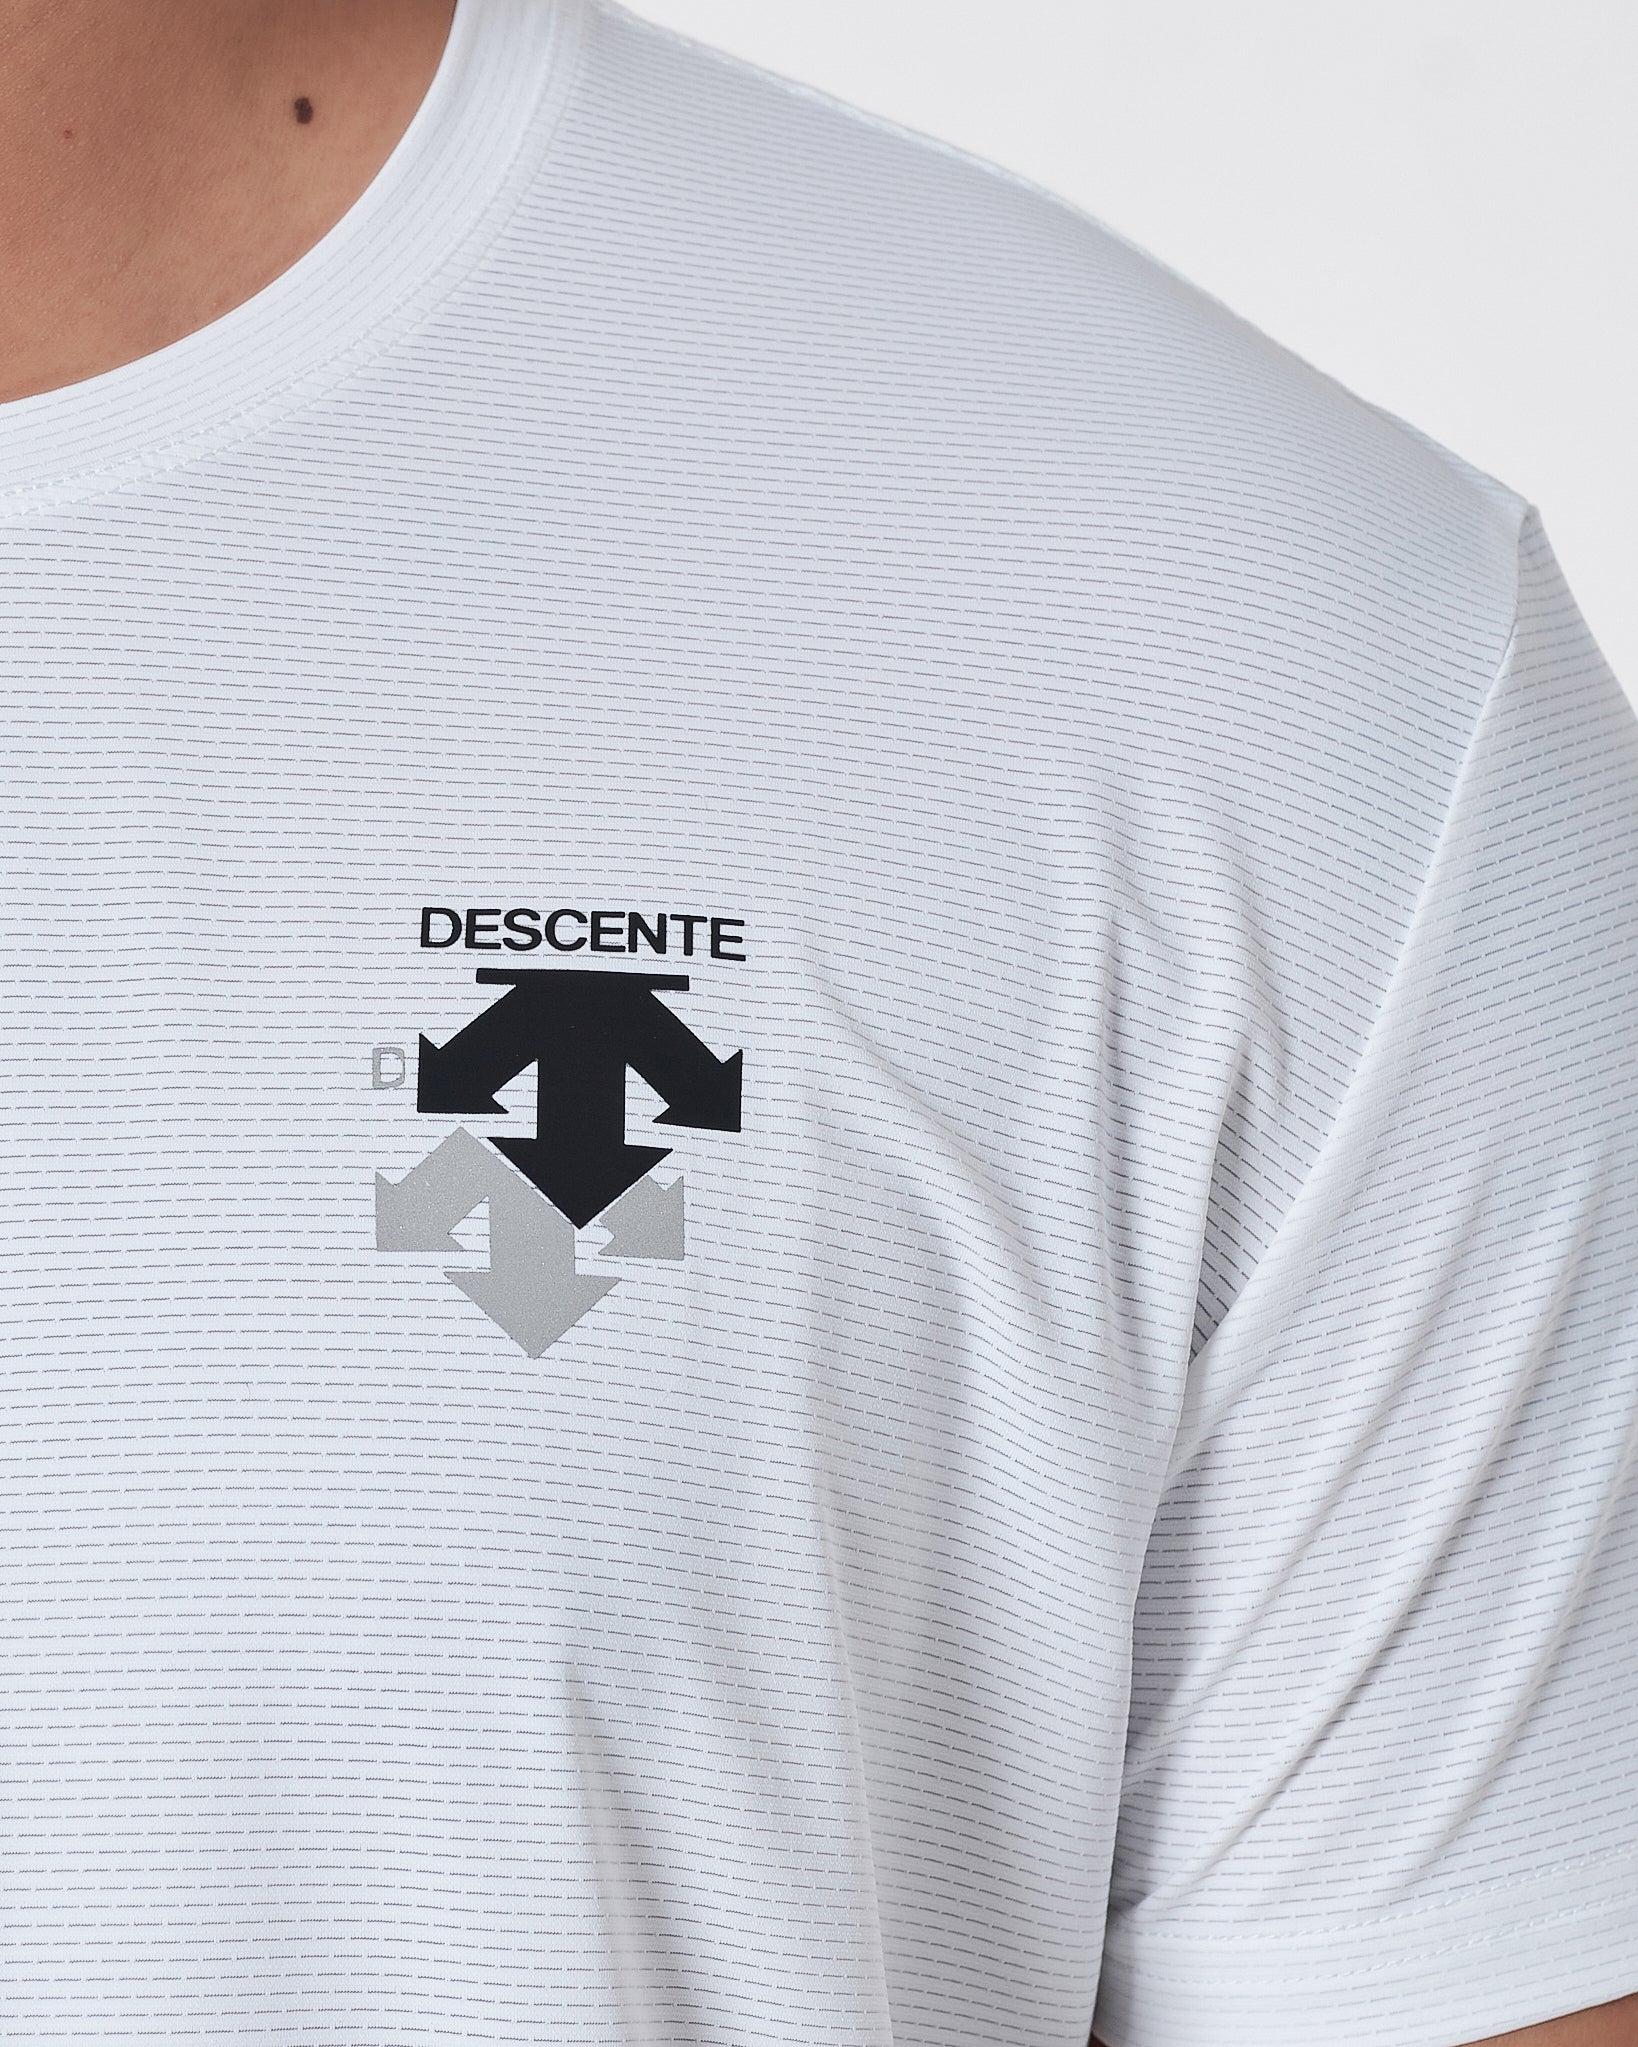 DES Logo Printed Men White Sport T-Shirt 13.50